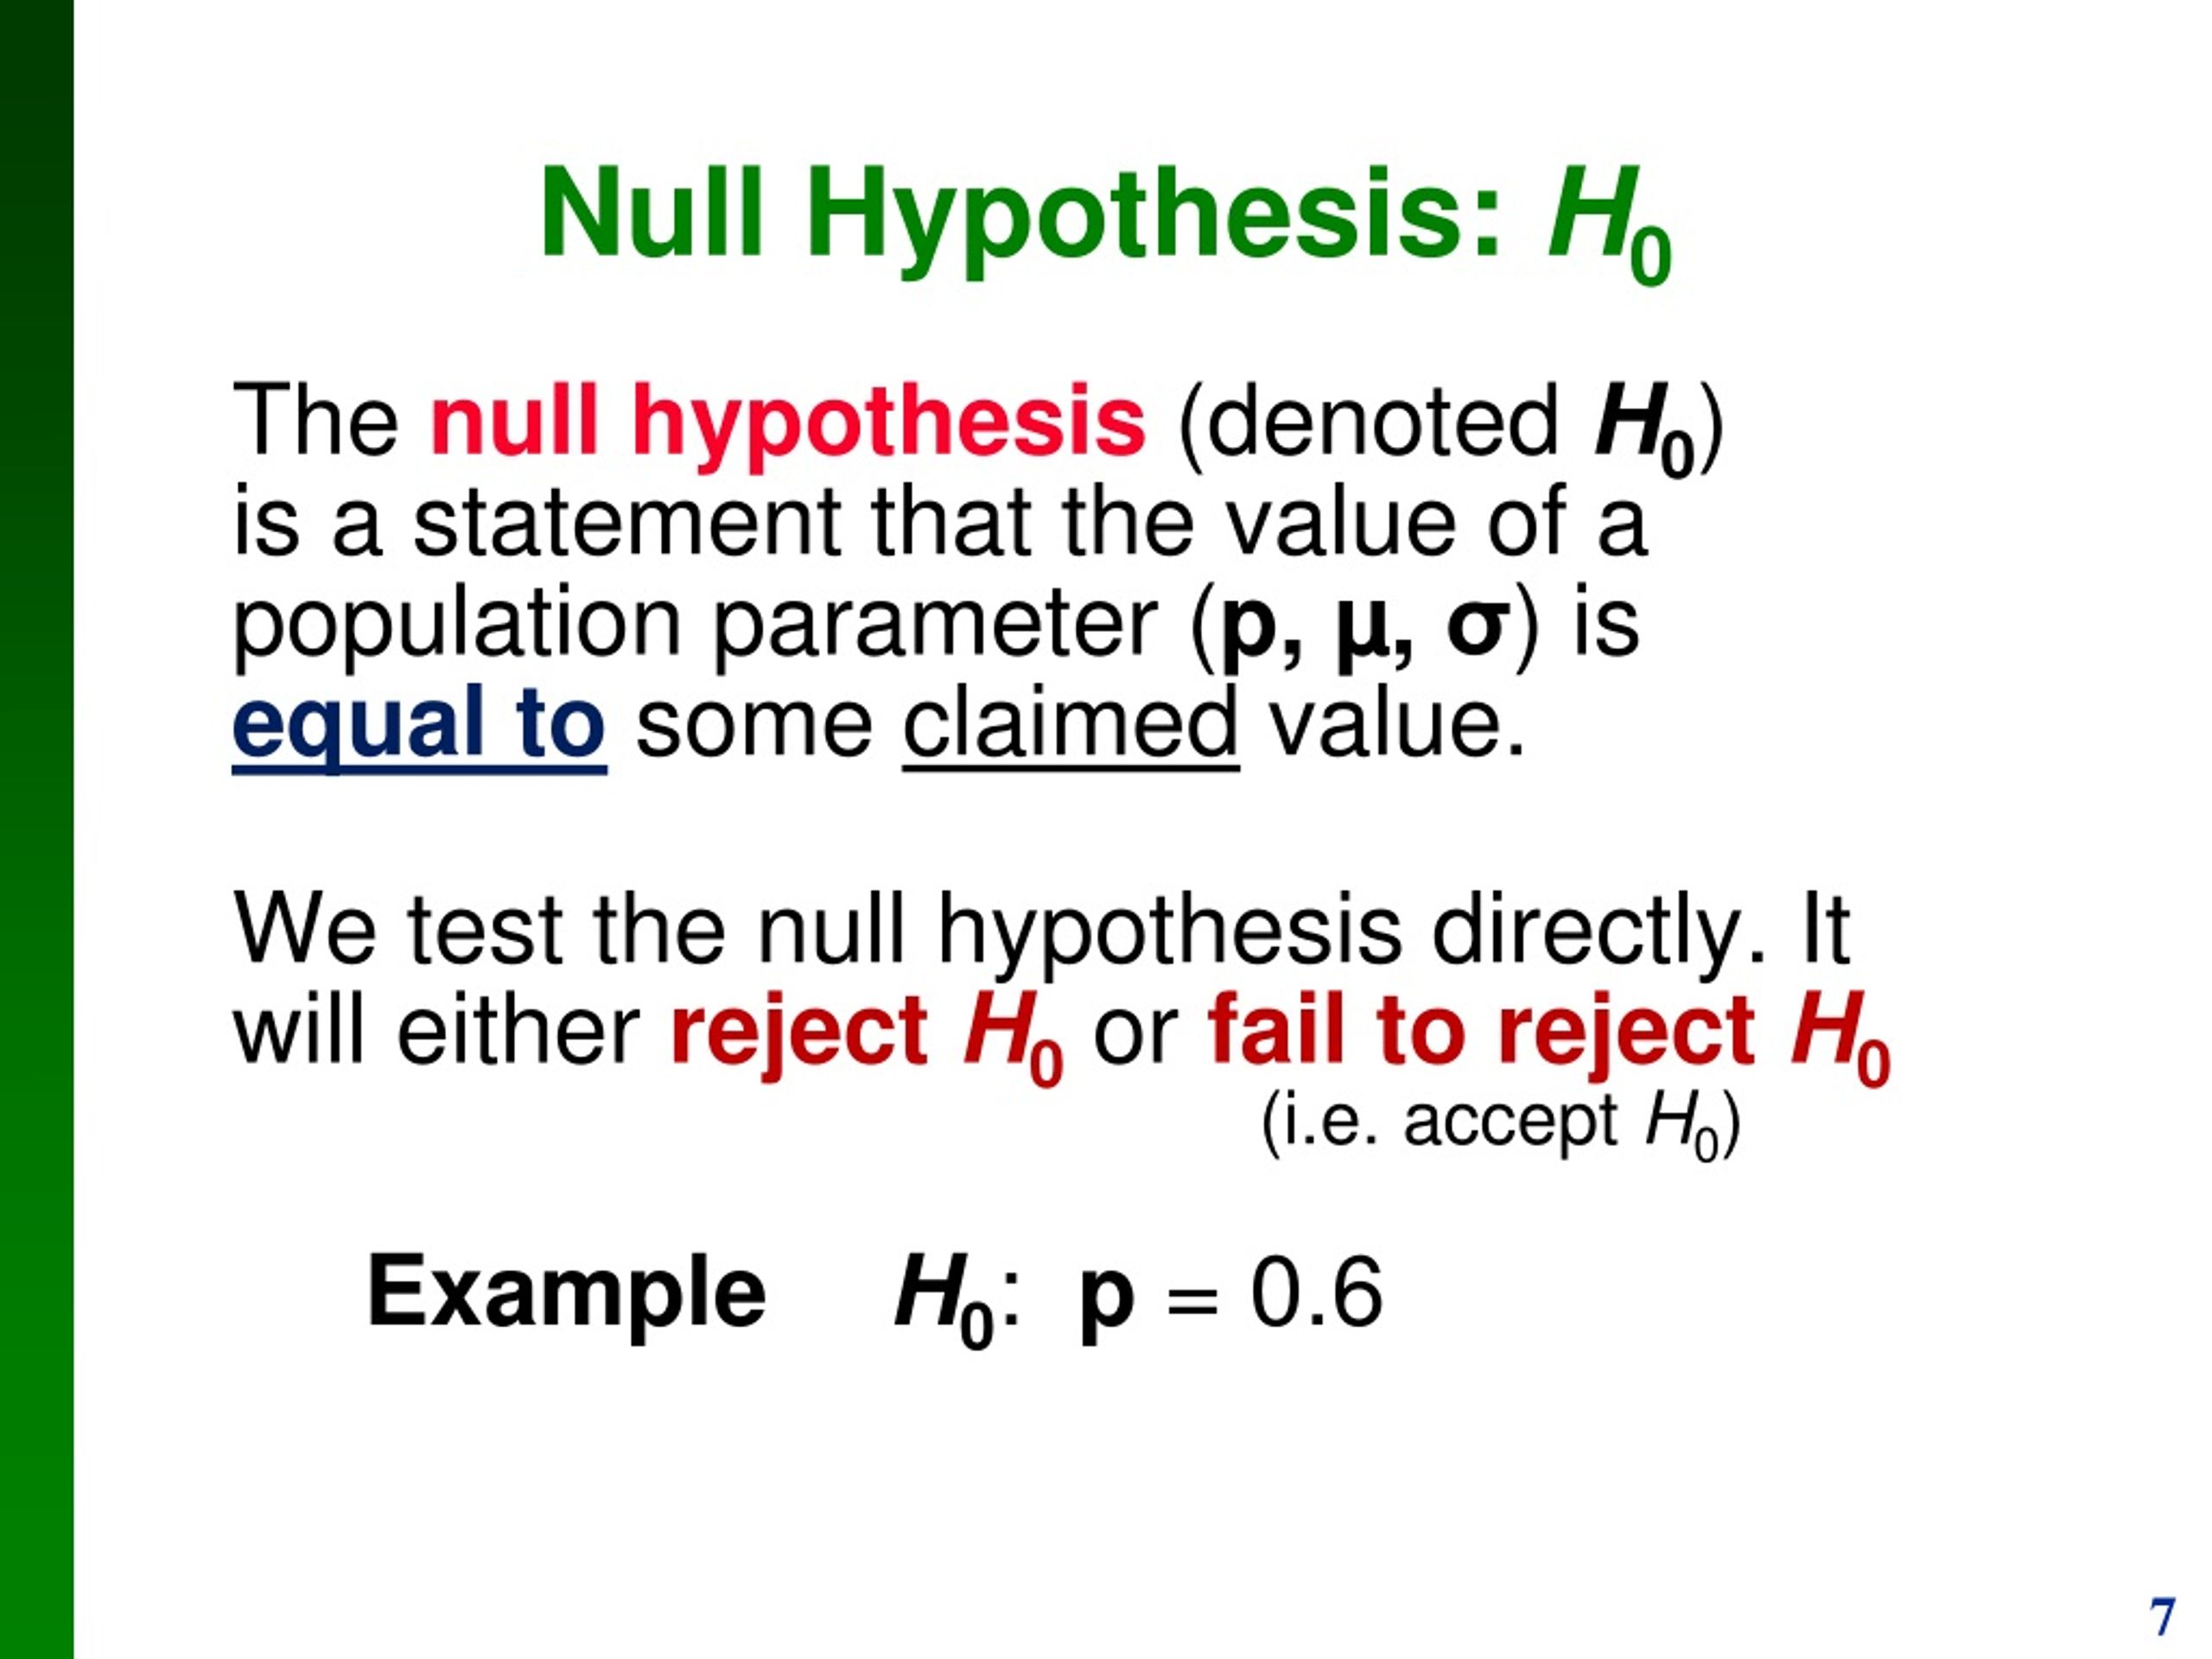 h_0 hypothesis